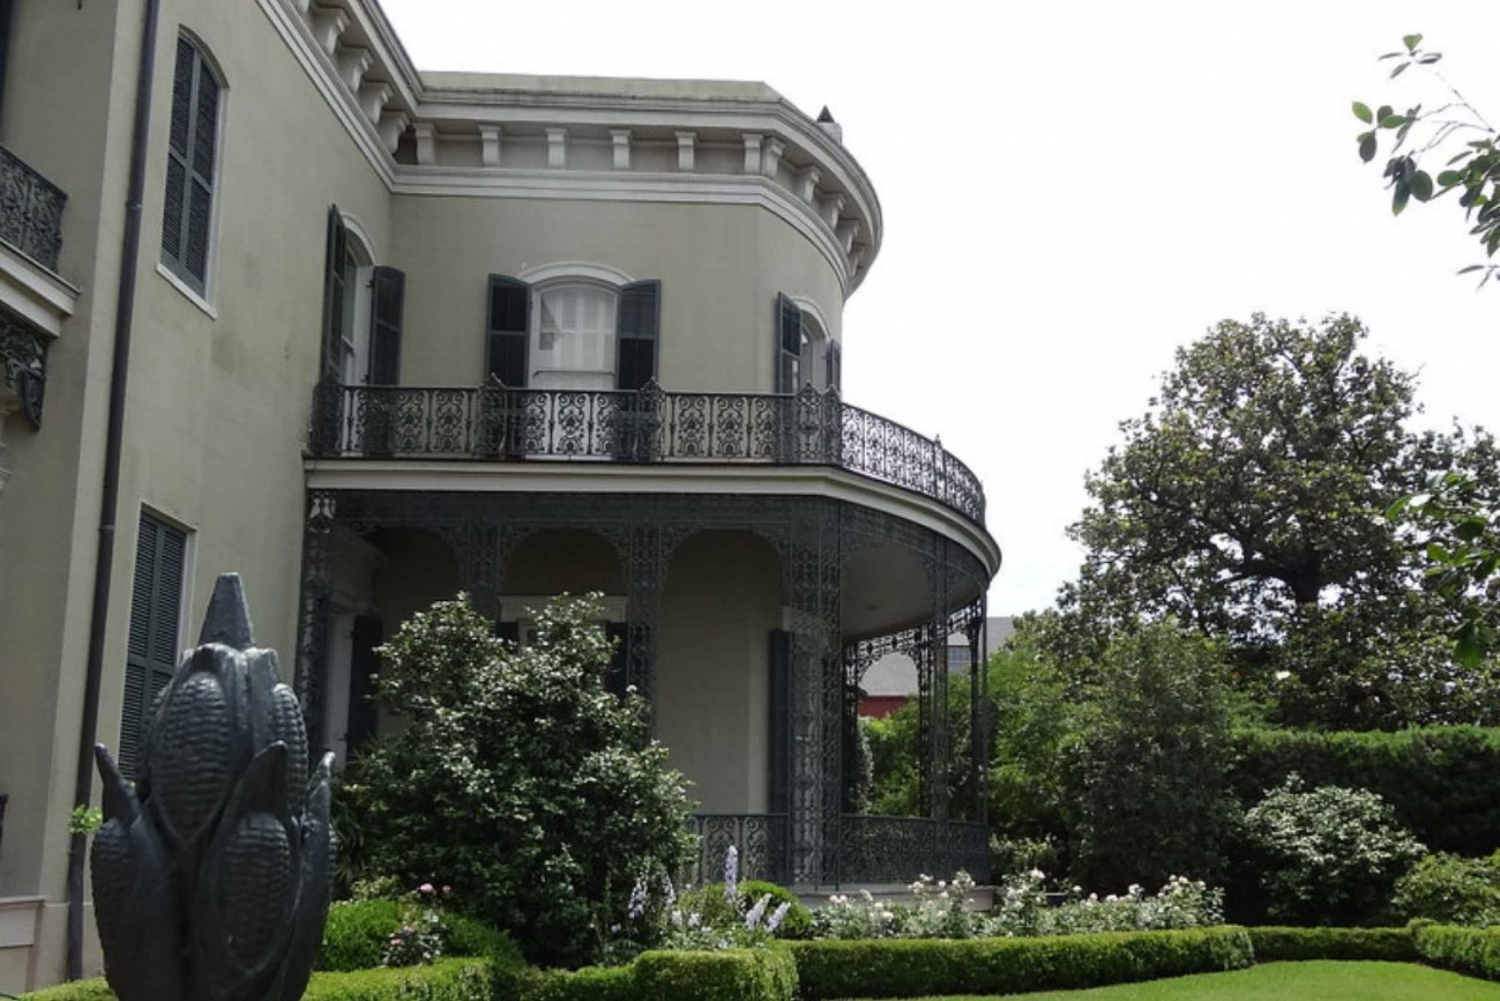 New Orleans: tombe e palazzi del Garden District